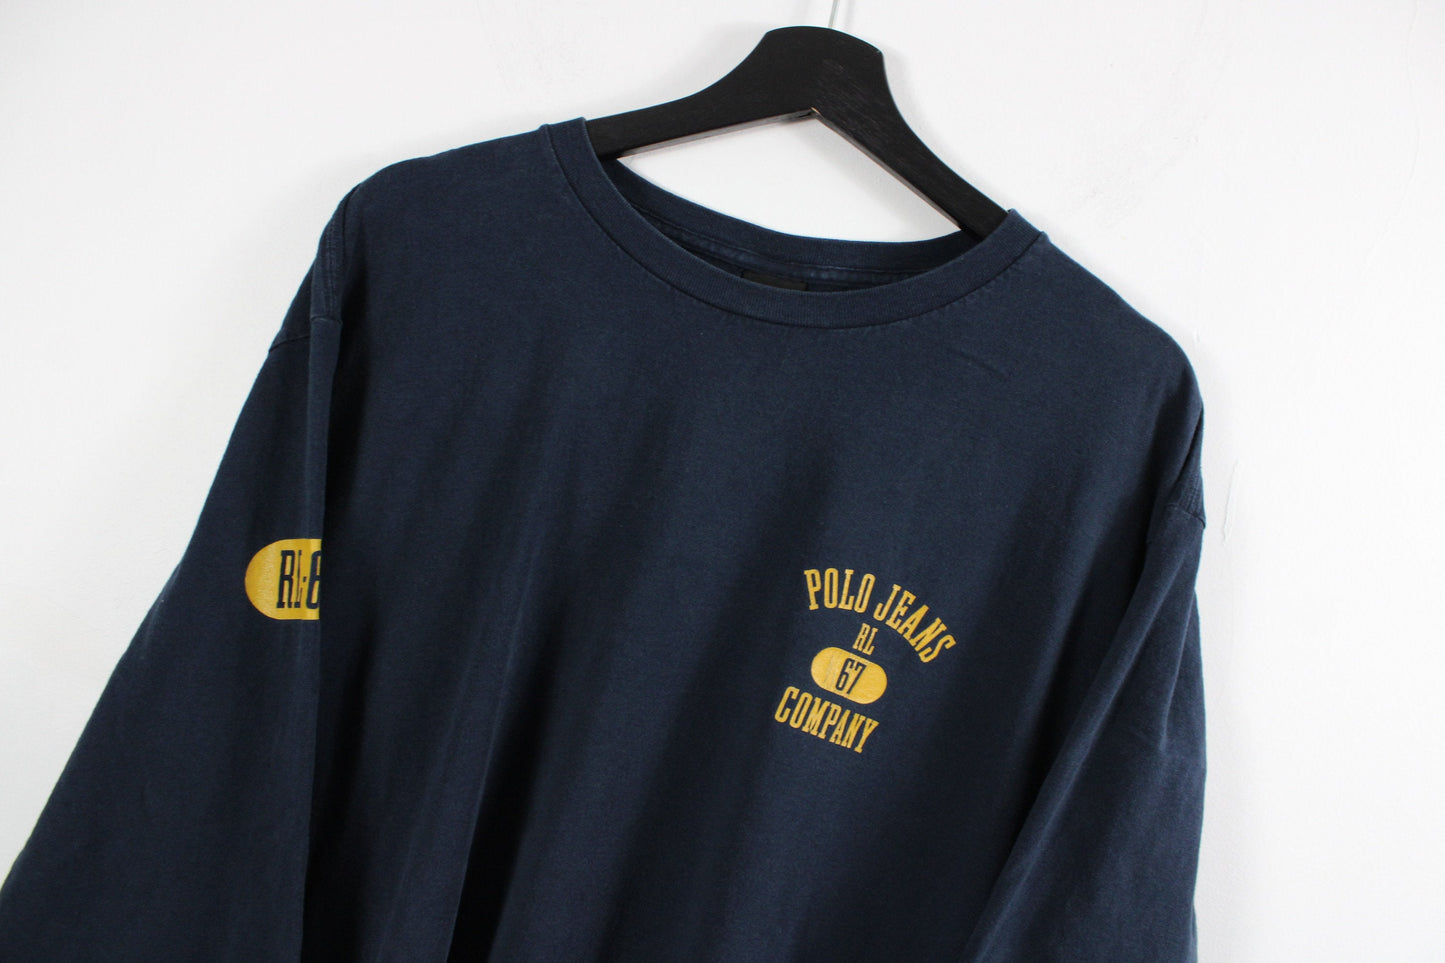 Ralph-Lauren Polo-Jeans T-Shirt / 90s Vintage Long-Sleeve Tee Shirt/ Hip Hop Clothing / Streetwear